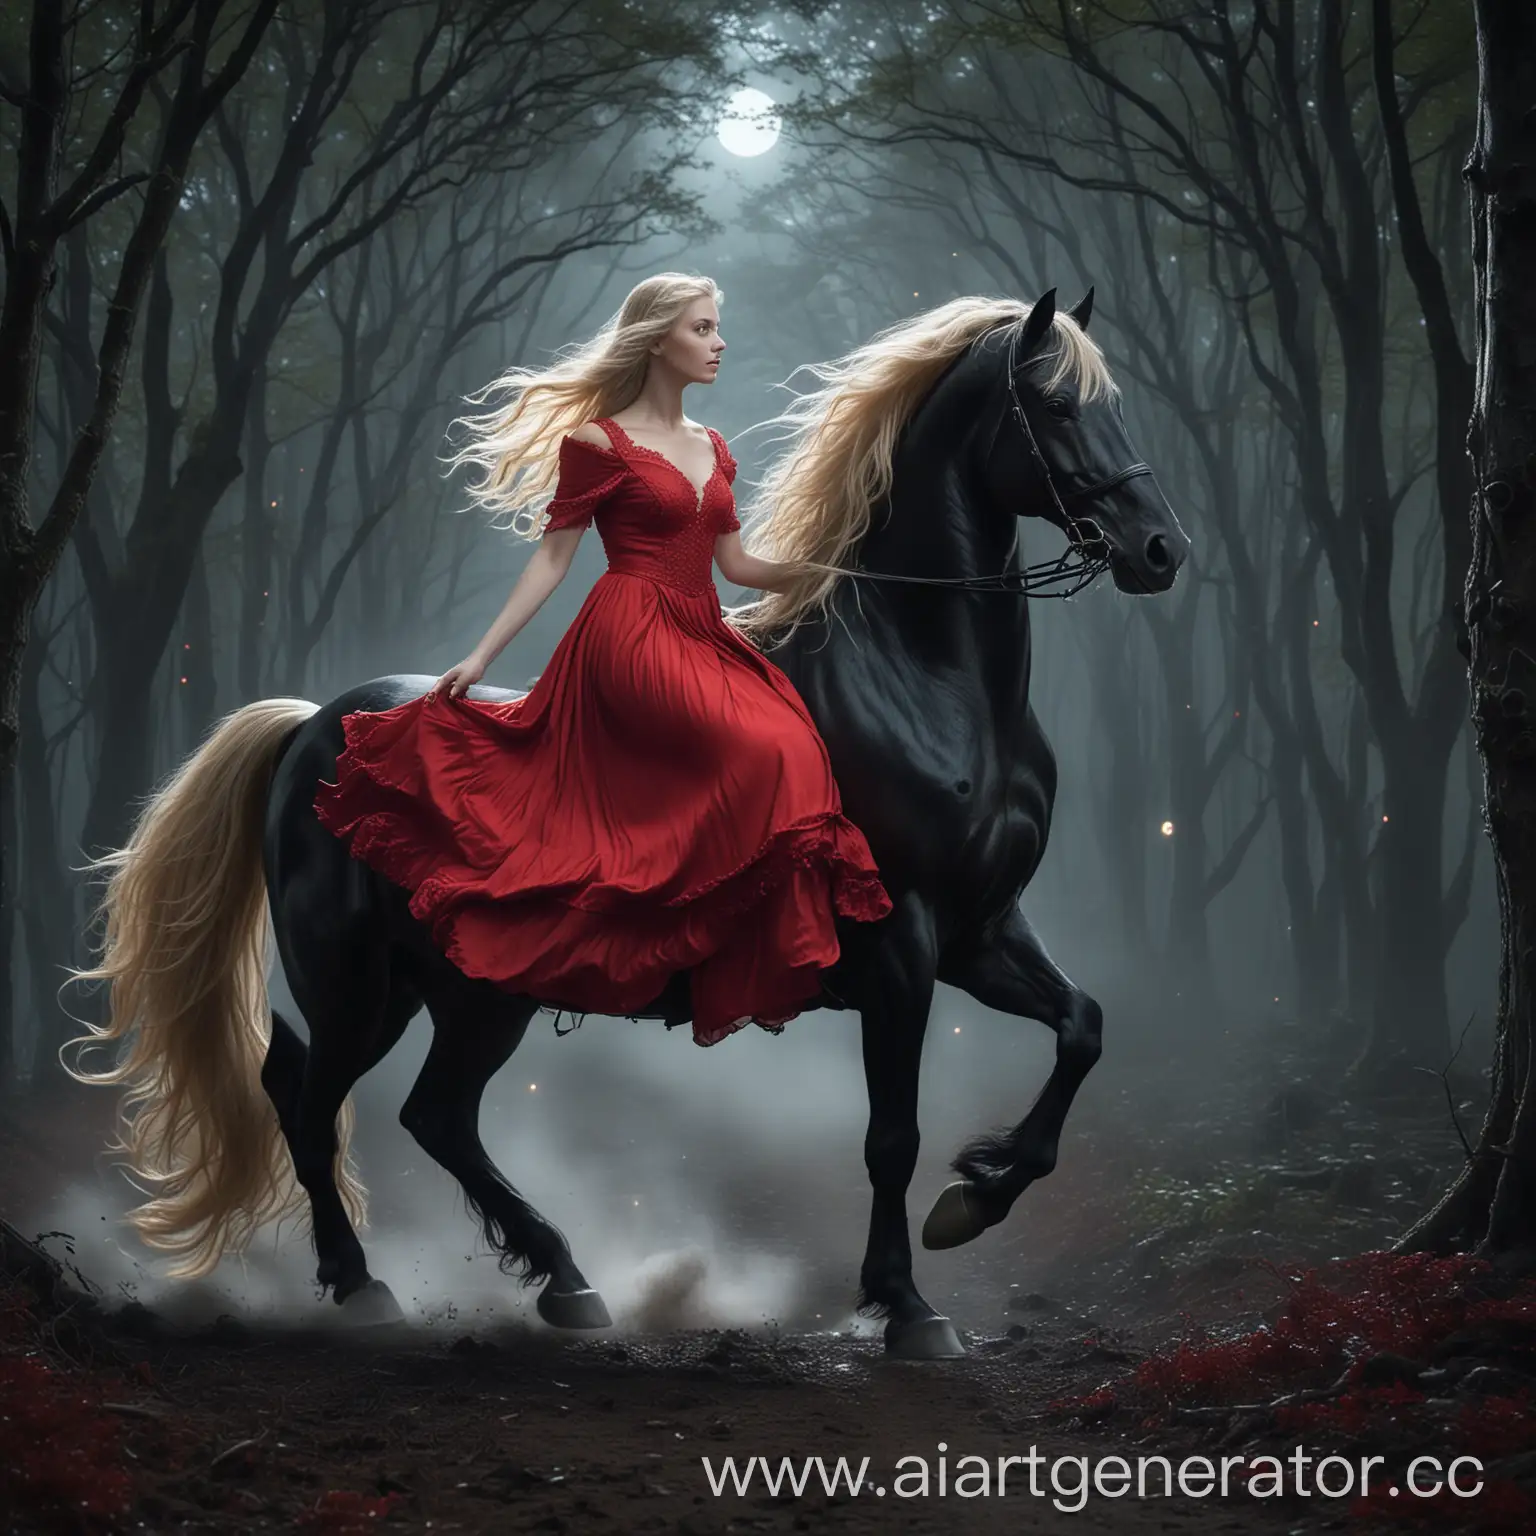 Enchanting-Blonde-Woman-Riding-Black-Stallion-in-Moonlit-Forest